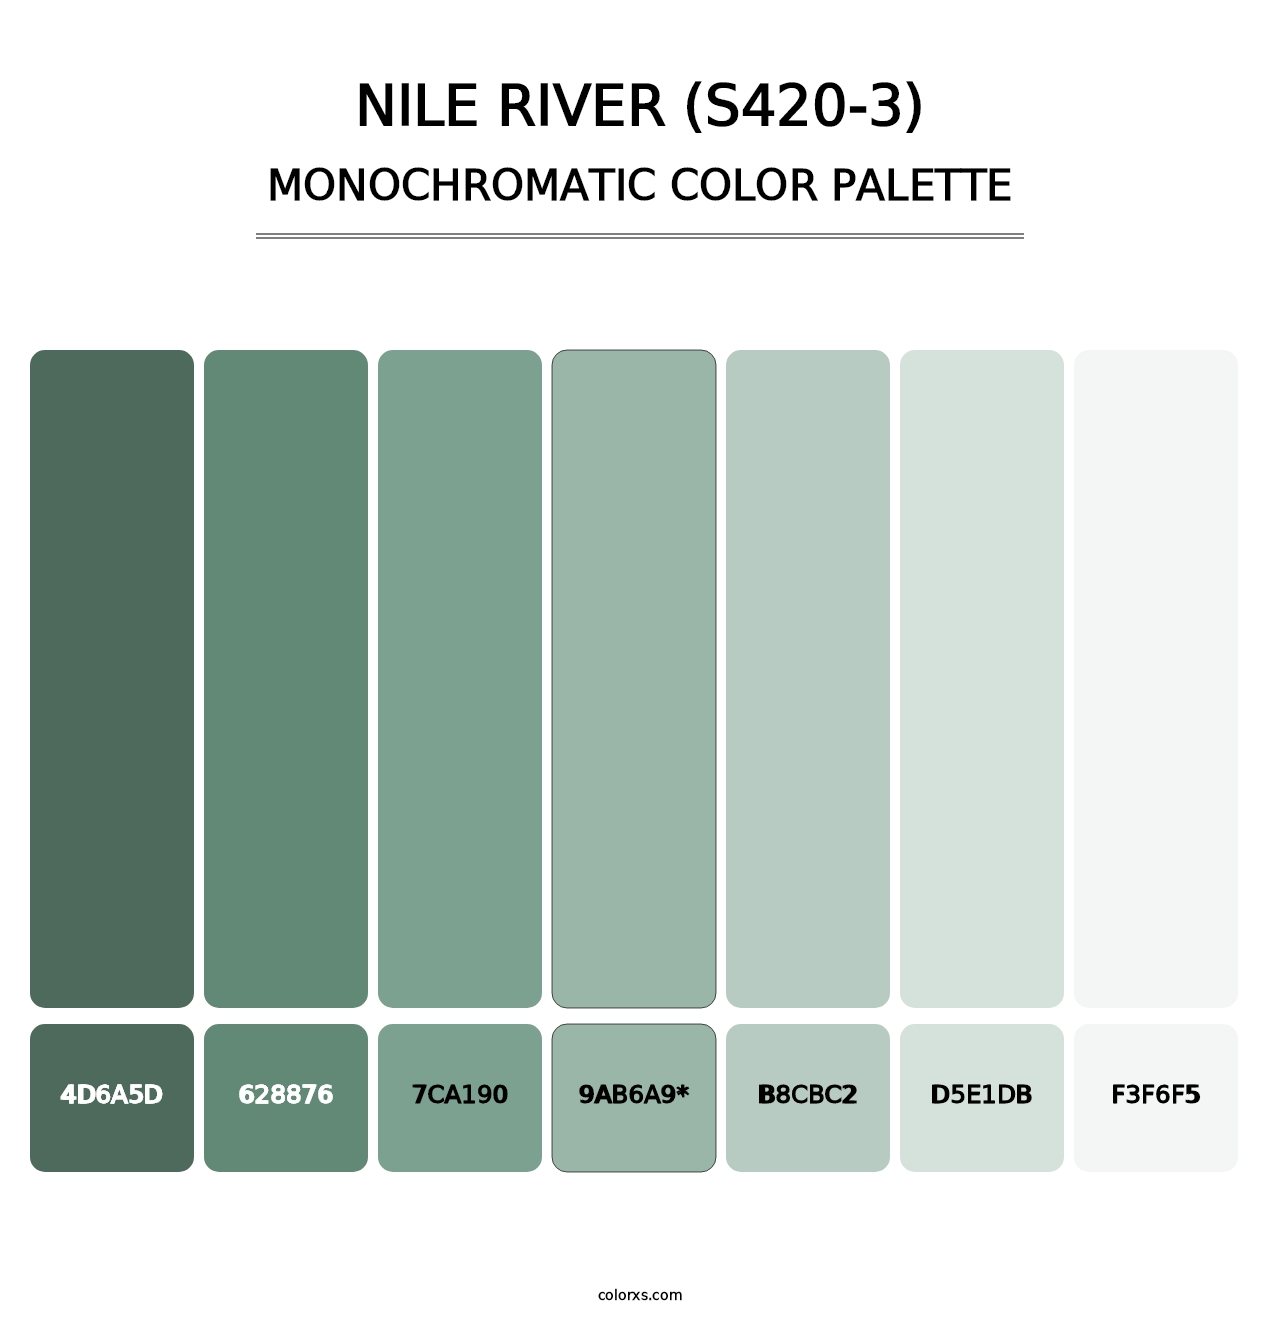 Nile River (S420-3) - Monochromatic Color Palette